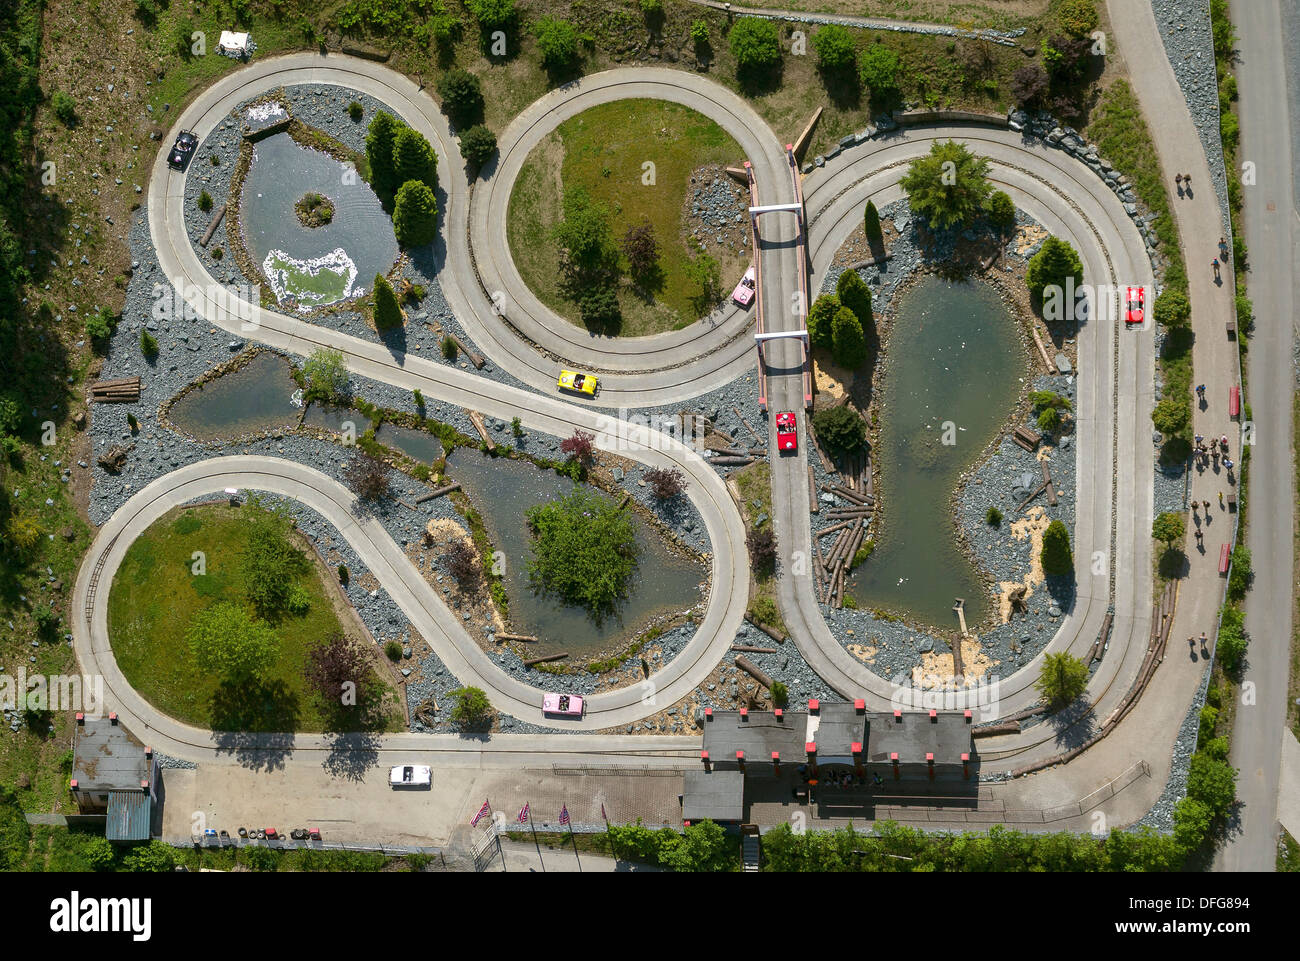 Aerial view, go-kart track in the amusement park of Fort Fun Adventure Land, Bestwig, North Rhine-Westphalia, Germany Stock Photo